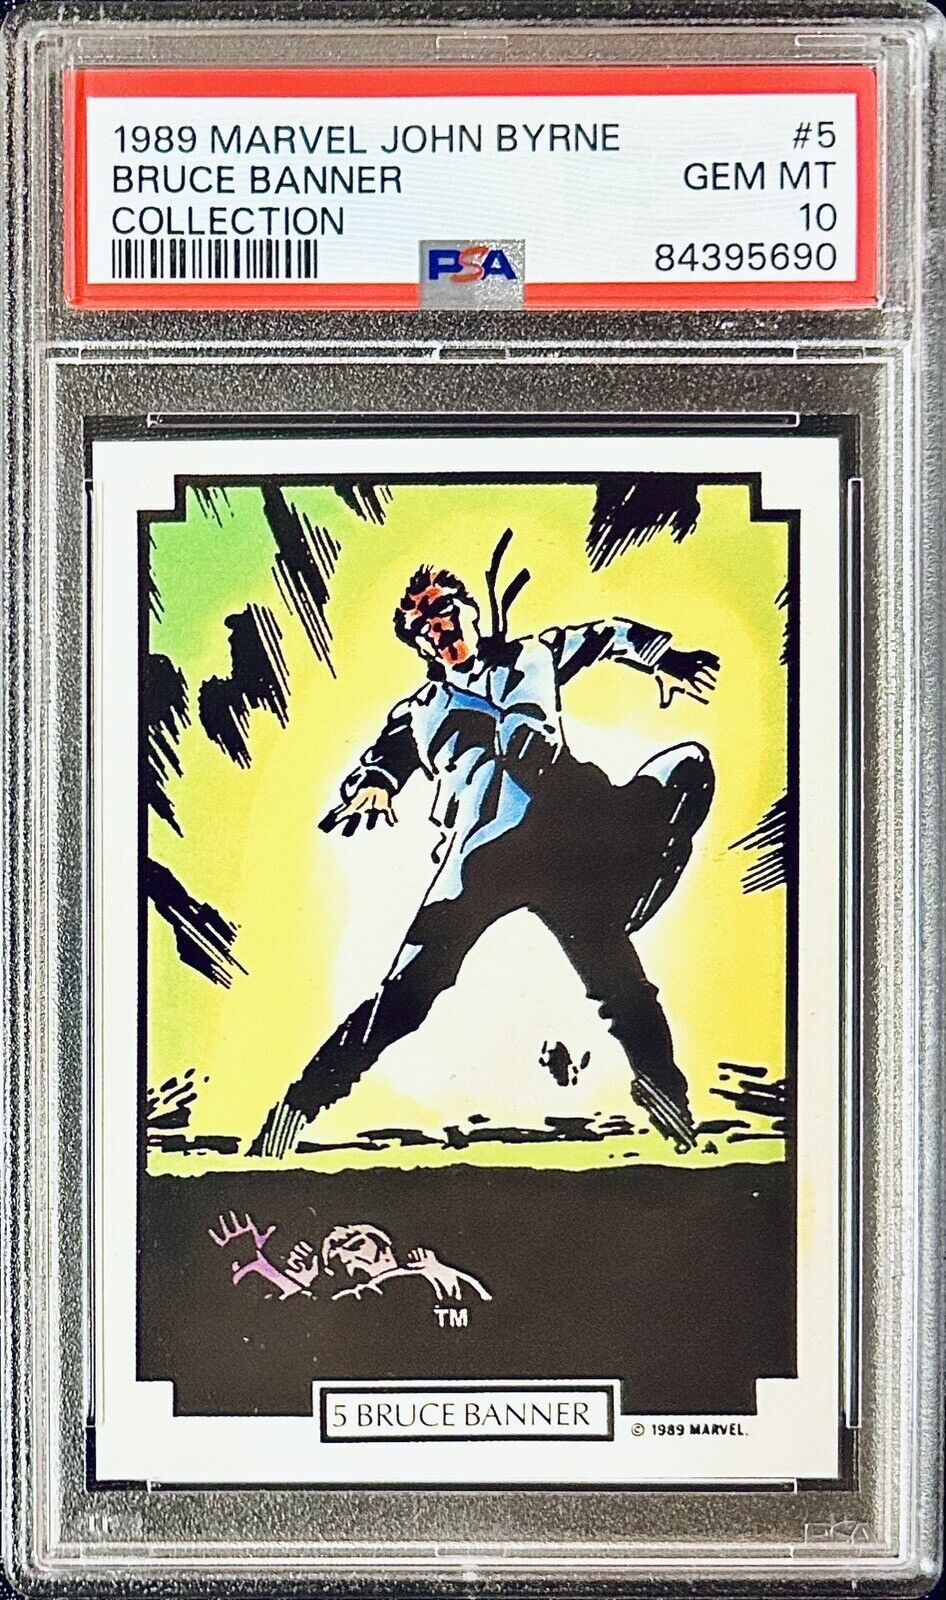 HULK BRUCE BANNER #5 PSA 10 GEM MT 1989 Marvel Comic Images John Byrne *POP 2